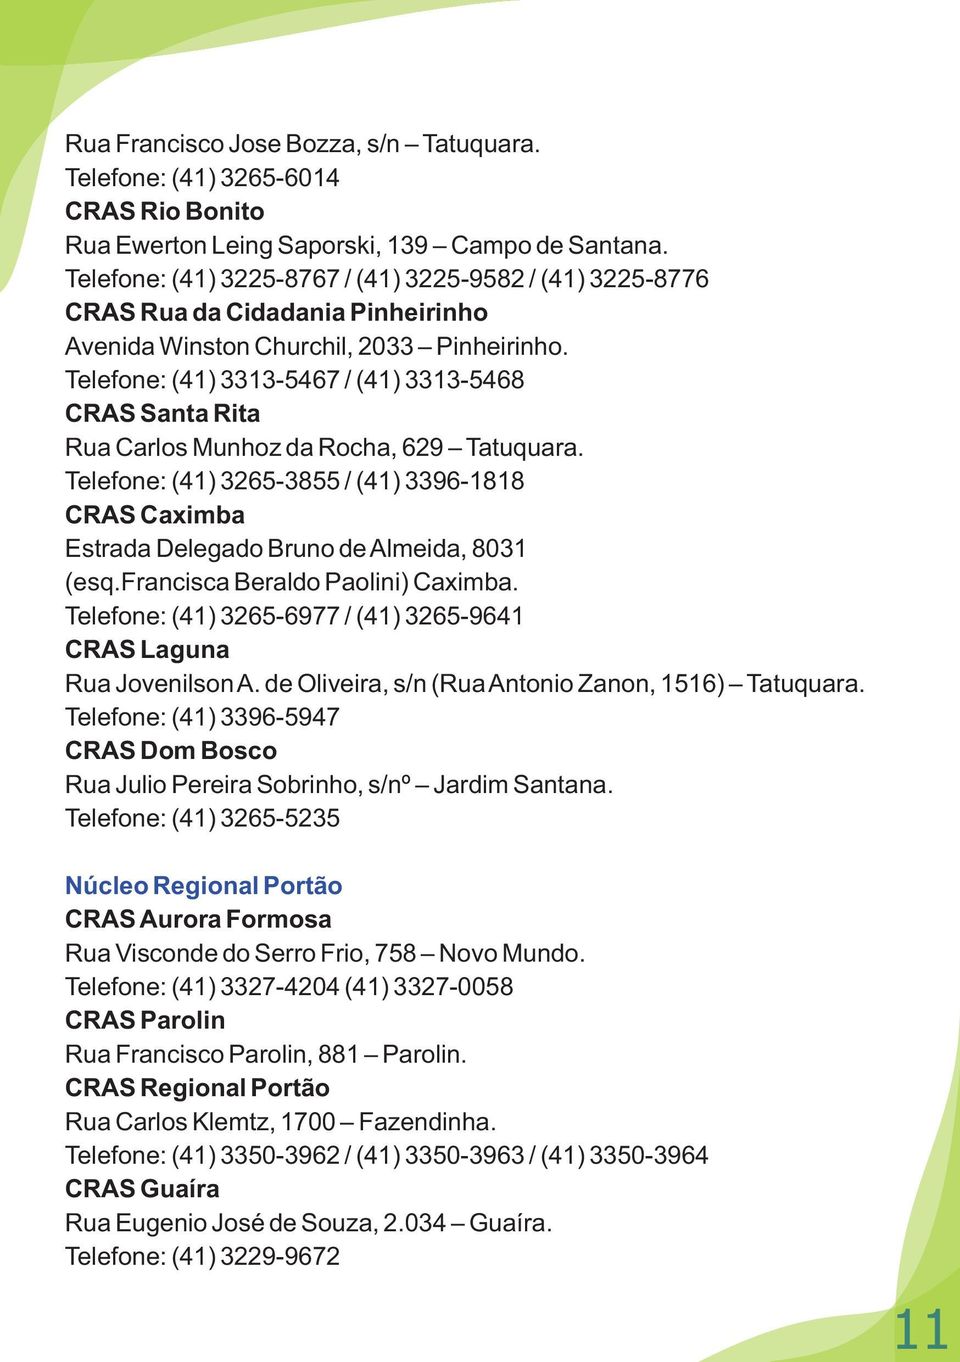 Telefone: (41) 3313-5467 / (41) 3313-5468 CRAS Santa Rita Rua Carlos Munhoz da Rocha, 629 Tatuquara.